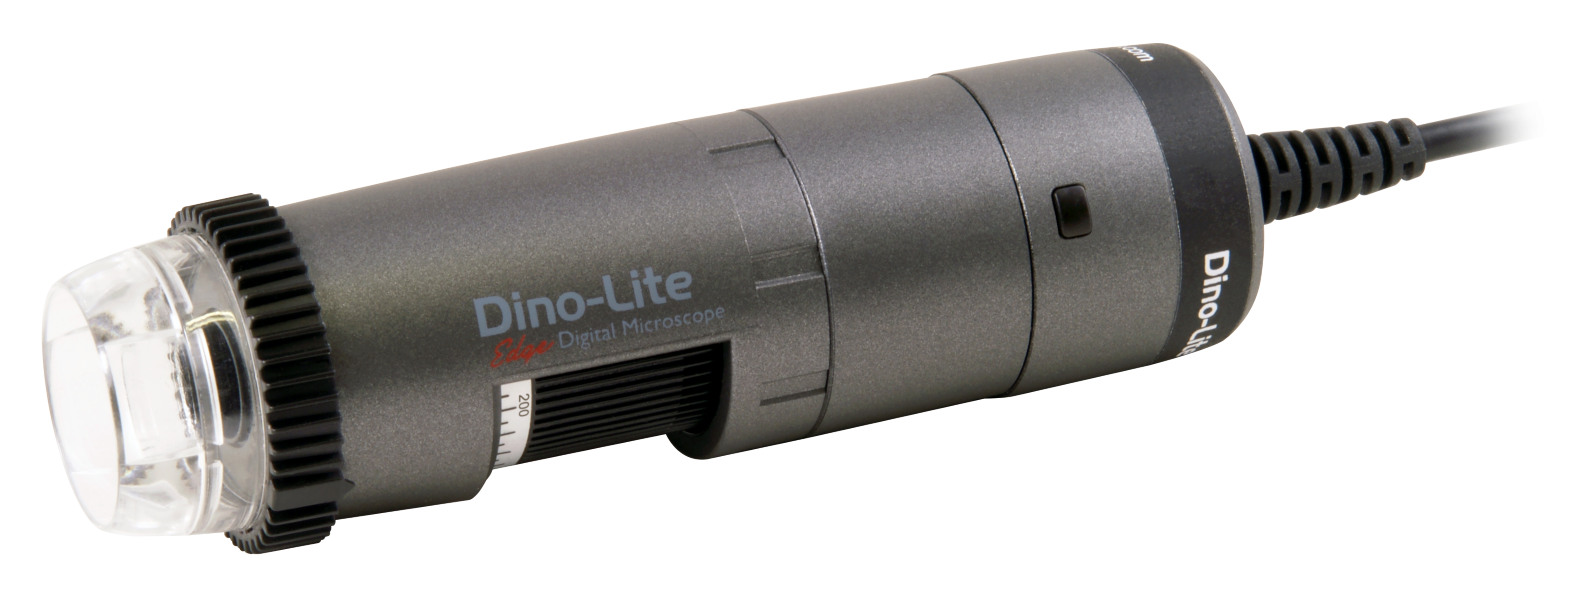 Dino-Lite Edge AF4115ZTL USB Digital Microscope